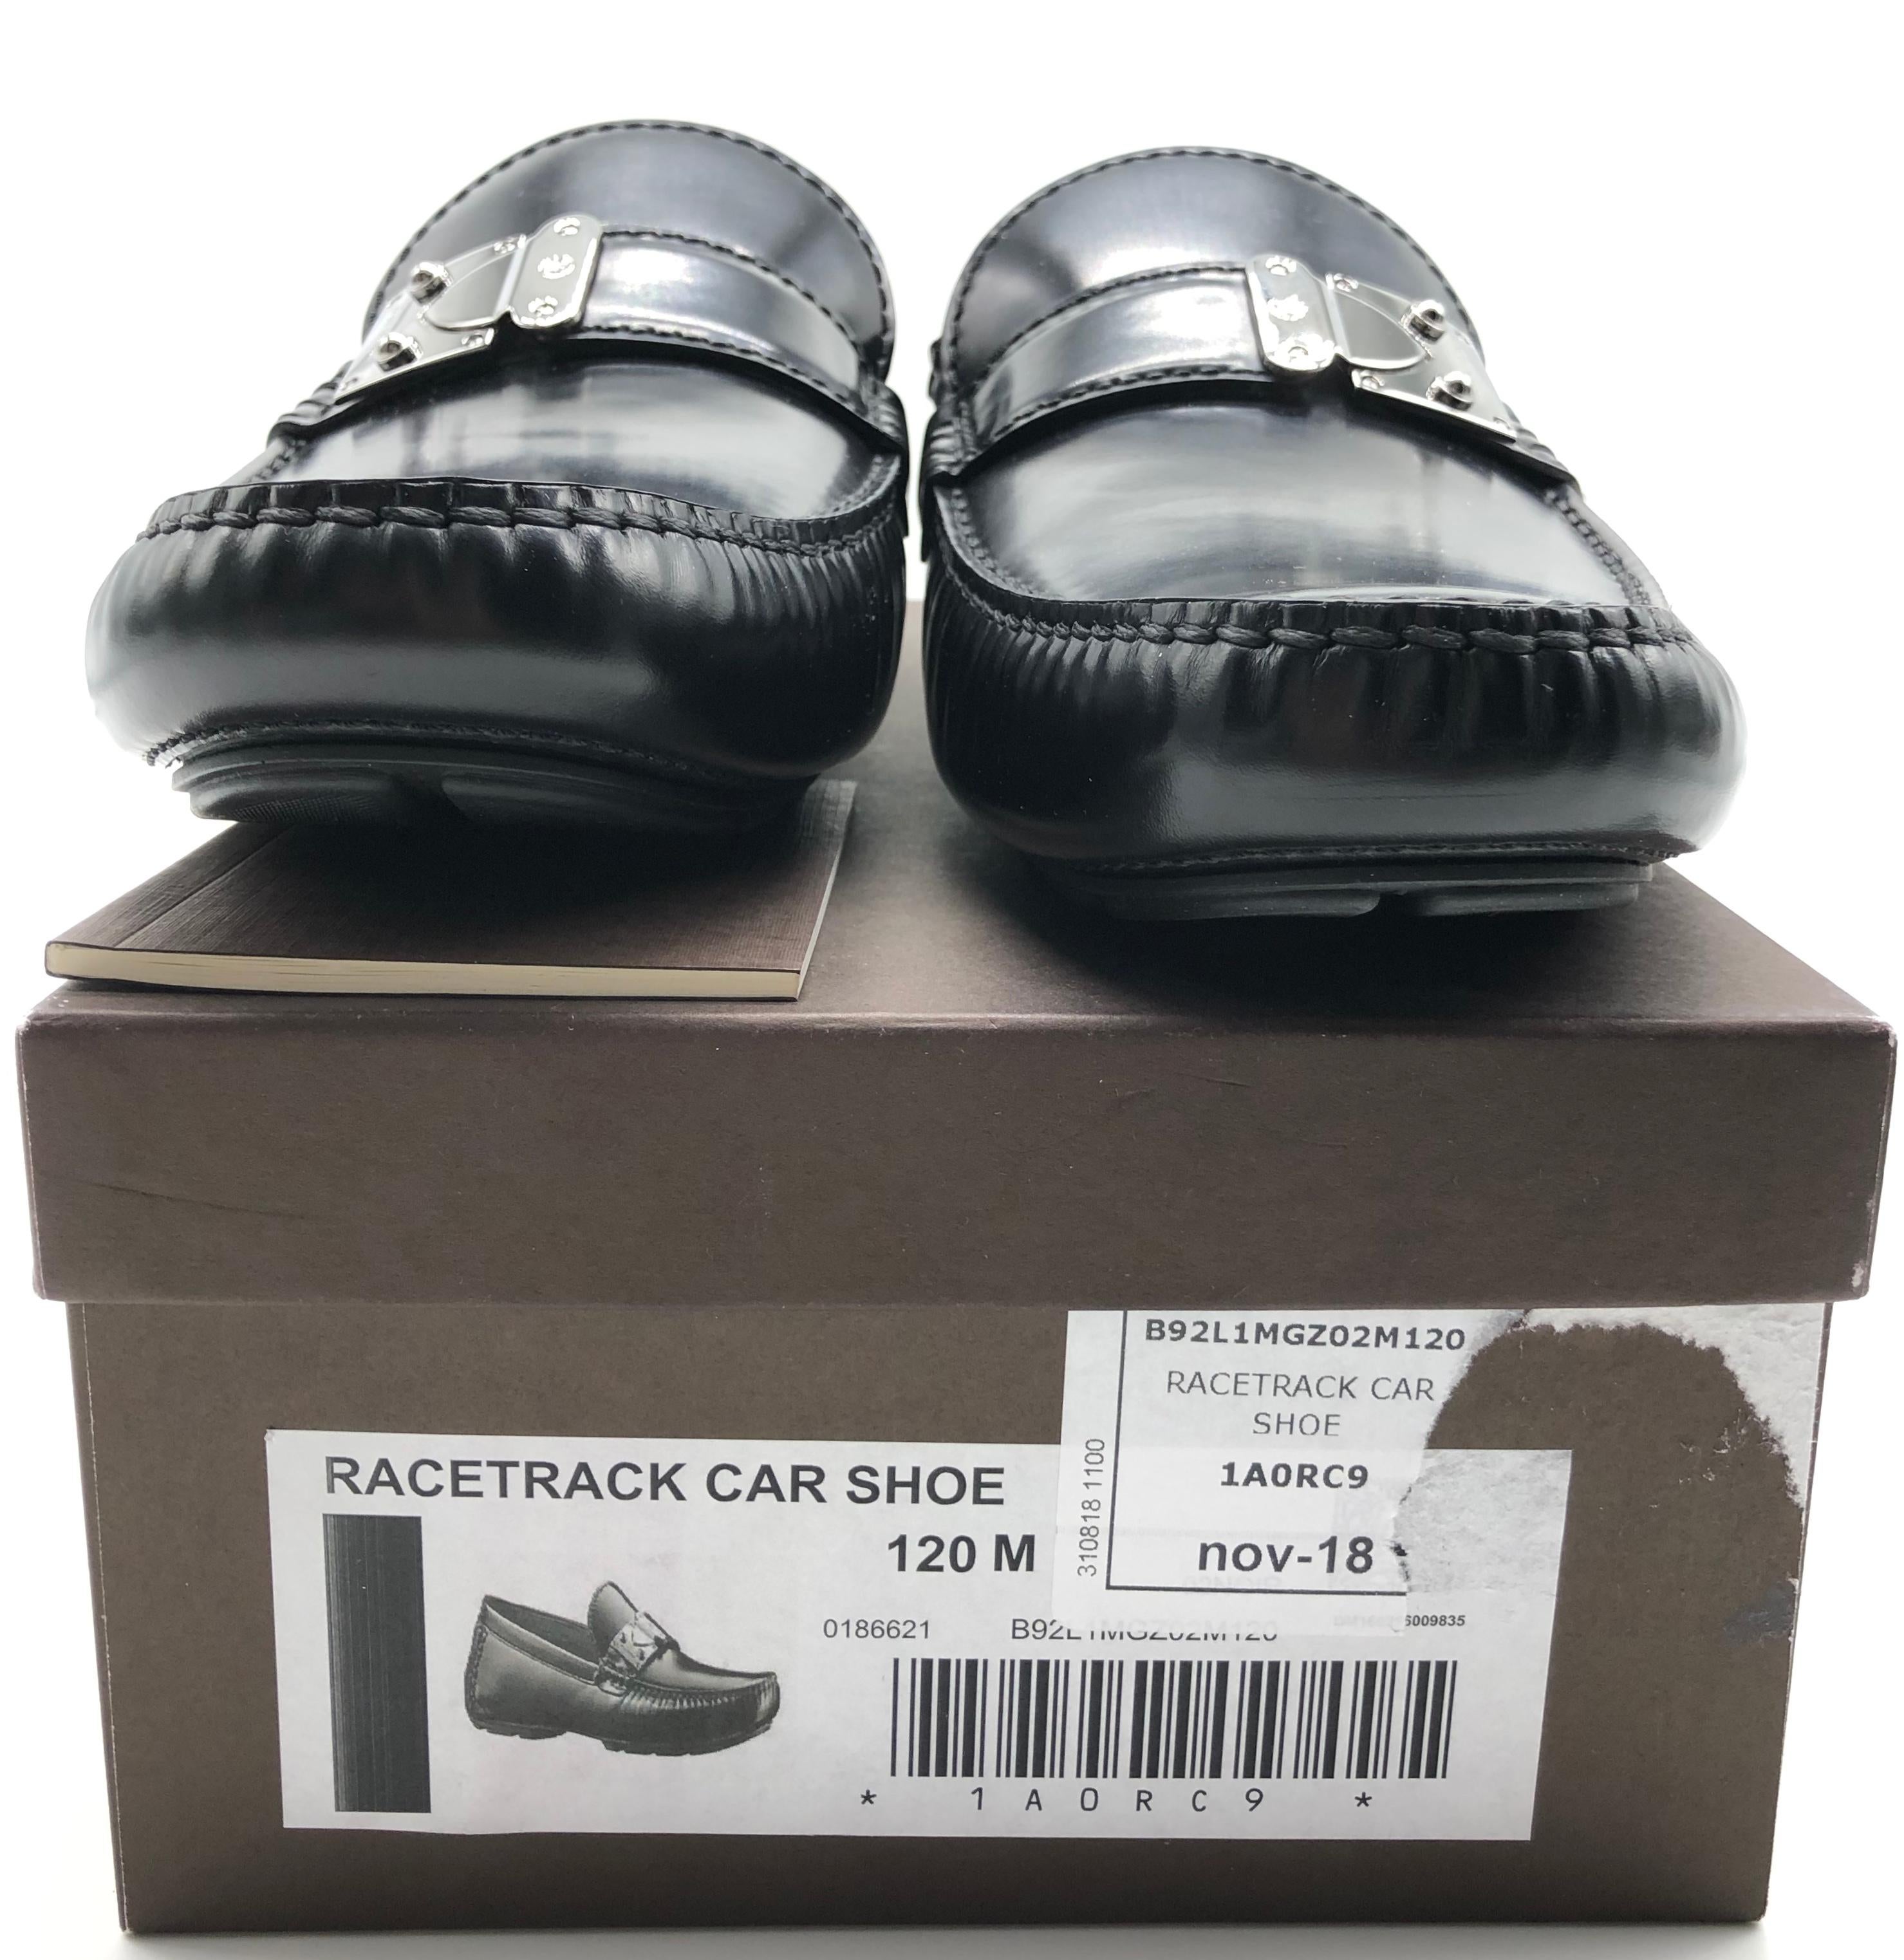 Louis Vuitton men Loafers in black leather // Model: RaceTrack car shoe // New! 3